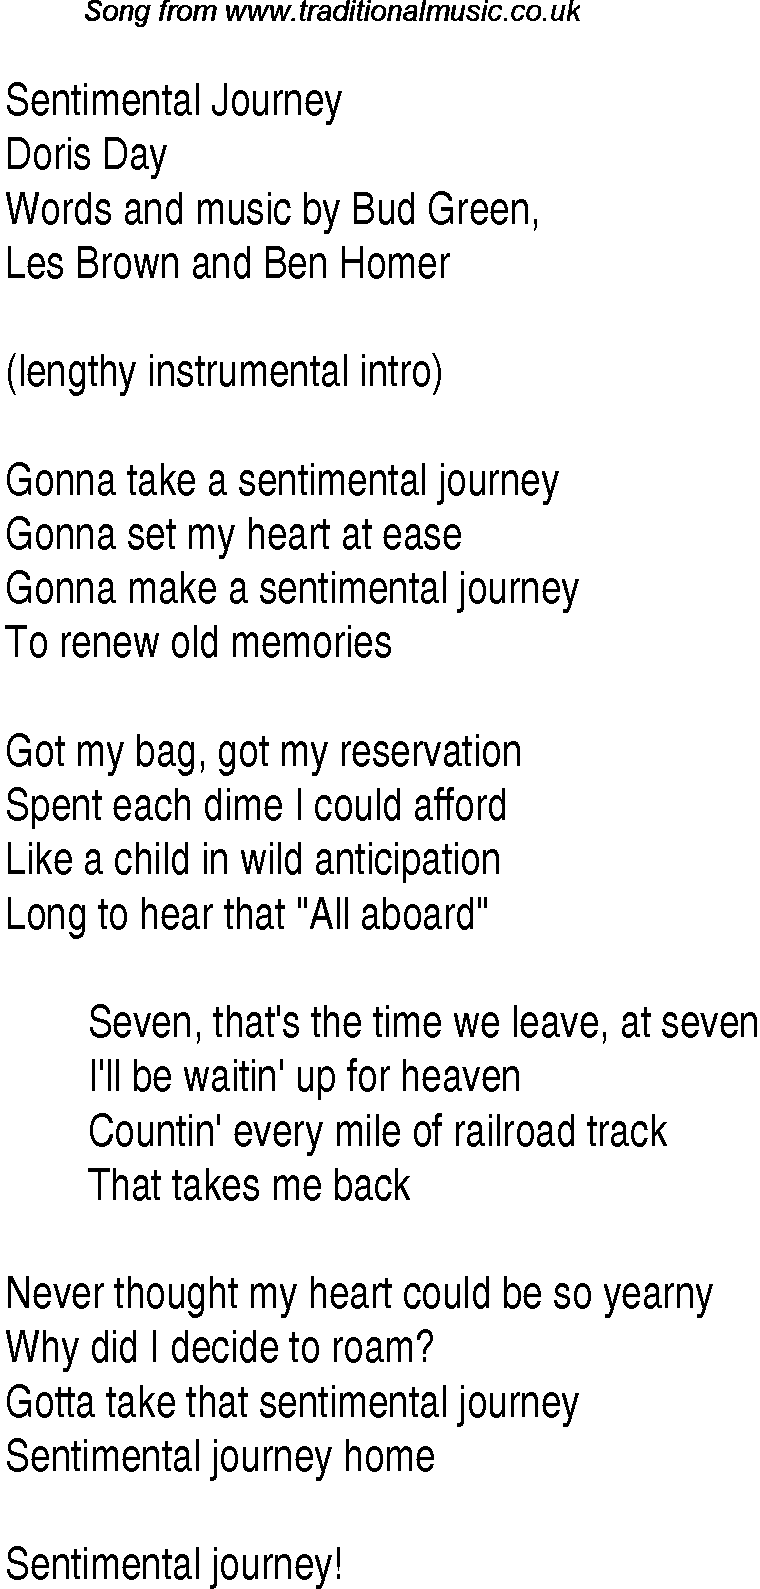 Music charts top songs 1945 - lyrics for Sentimental Journey